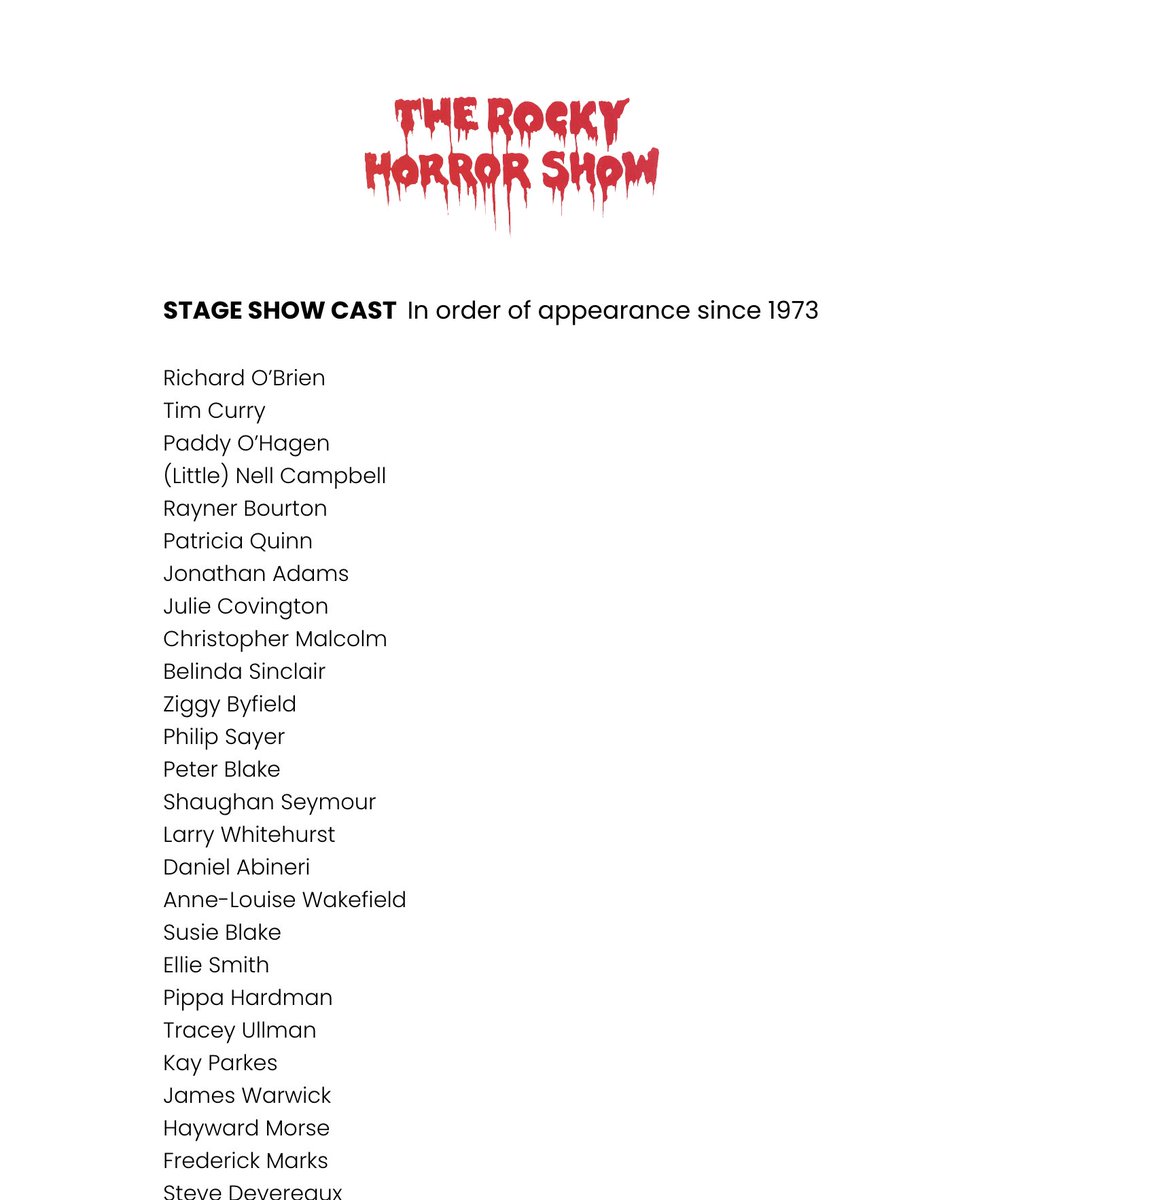 🎭What a list! The RHS cast list roll call of 1500 stars in order of appearance since 1973...

👉rockyhorrorshow.online

#rockyhorror #franknfurter #timcurry #richardobrien #patriciaquinn #rockyhorrorshow #magenta #musical #timewarp #drfranknfurter #riffraff #sweettransvestite